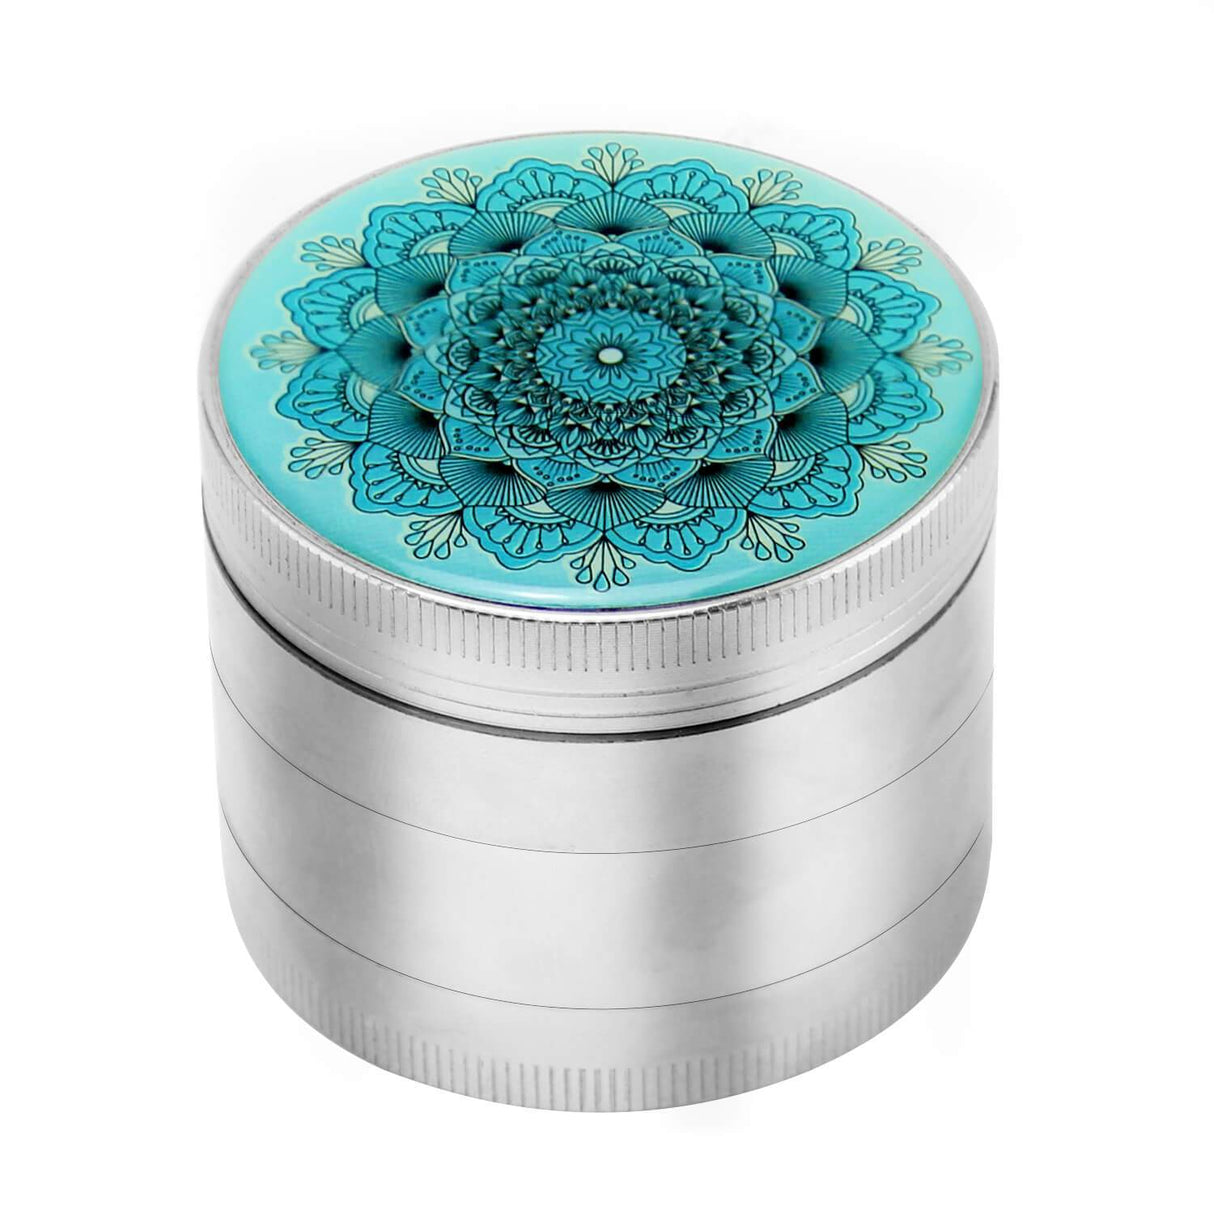 PILOT DIARY Mandala Grinder Silver with intricate blue mandala design - top view